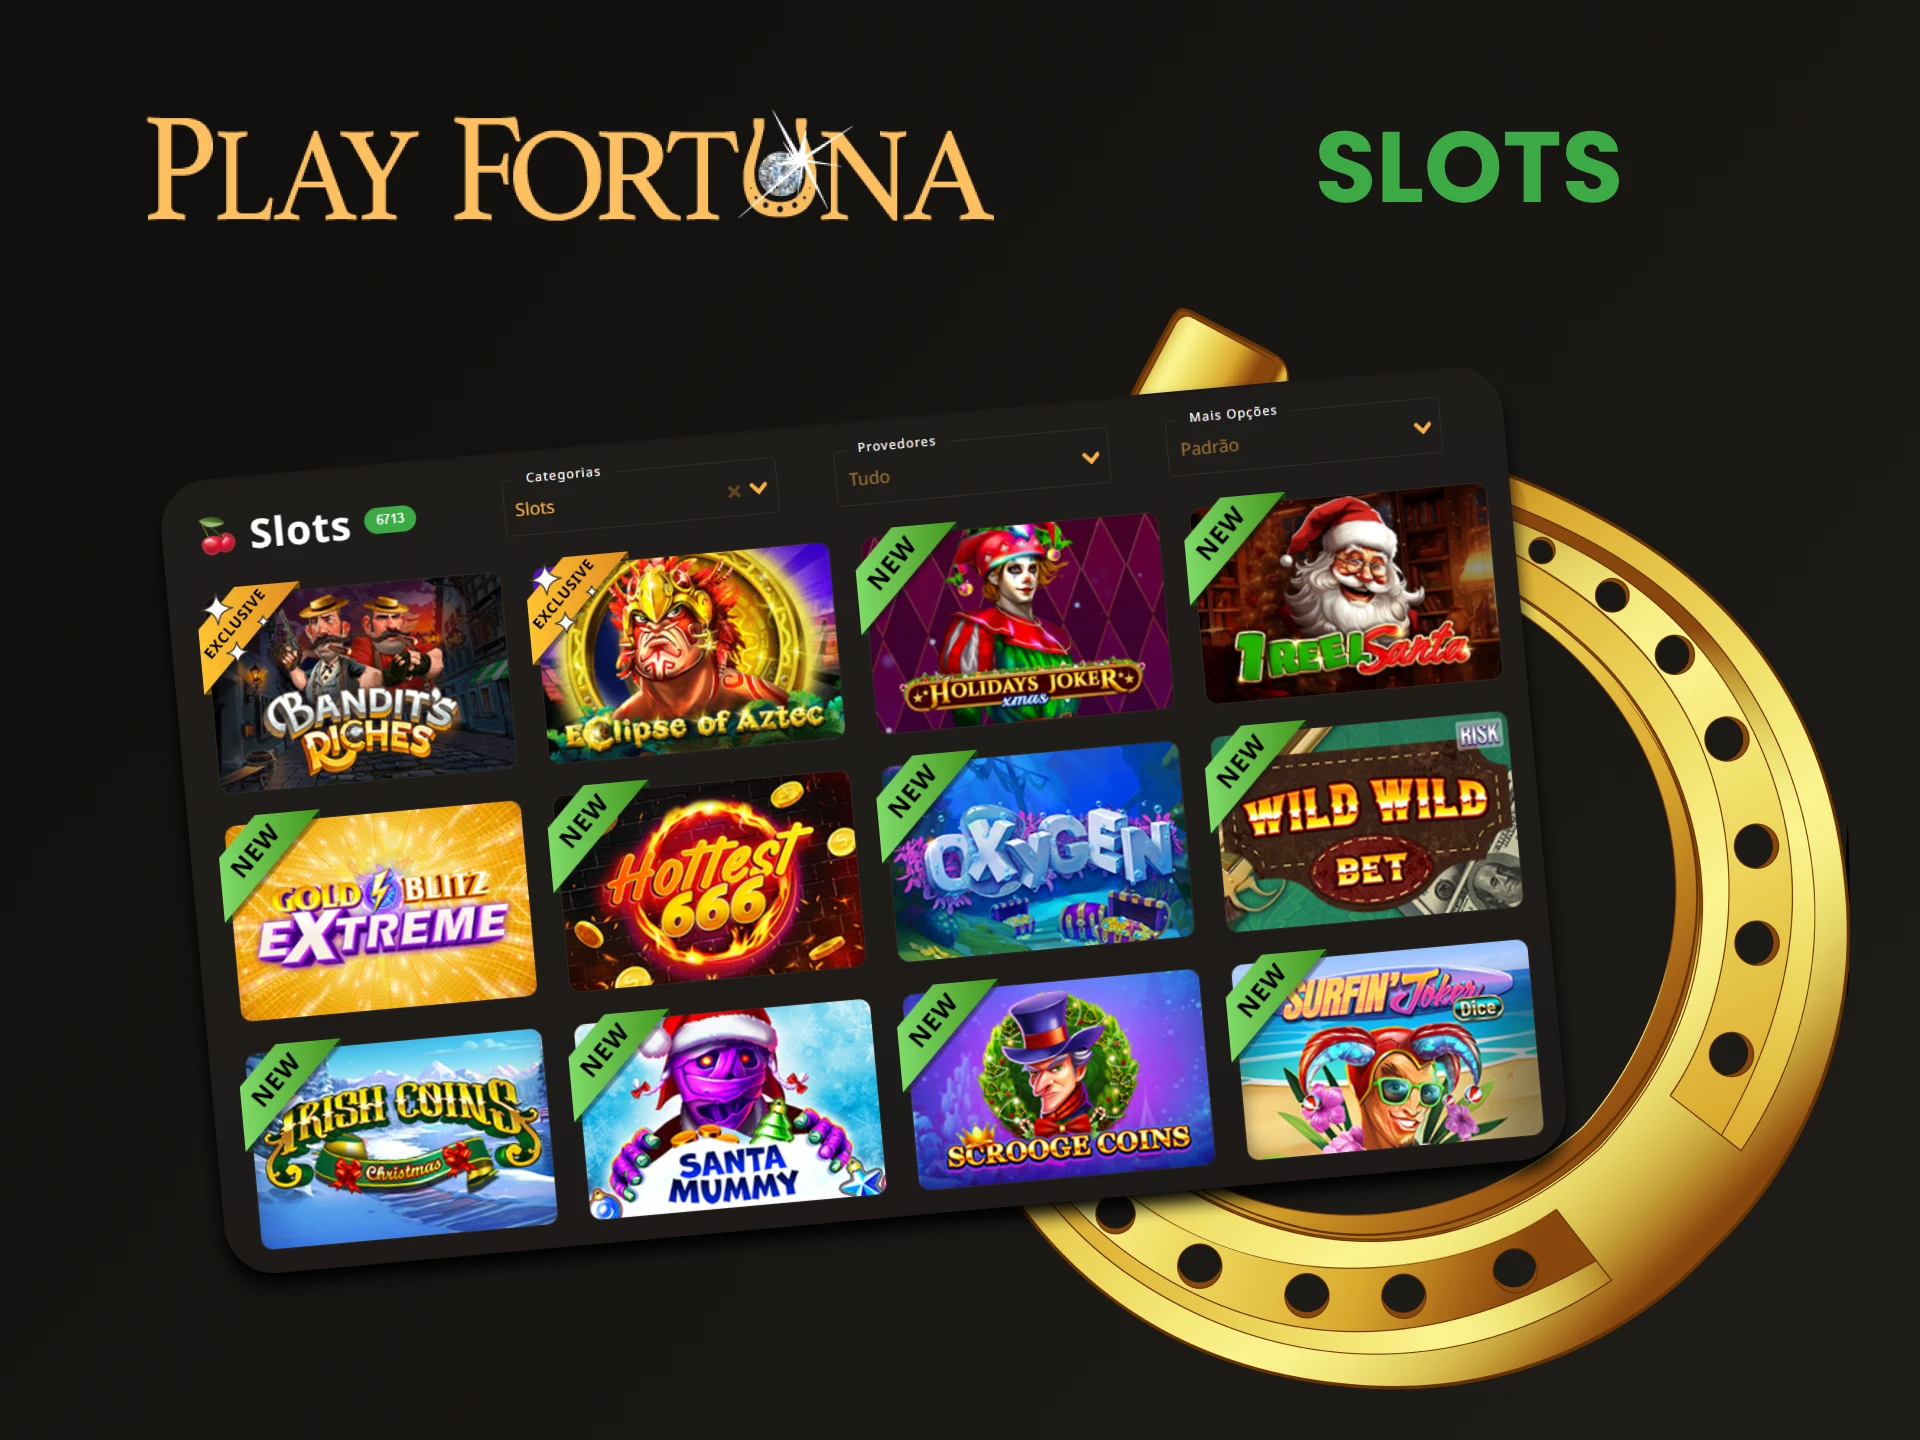 Jogue slots no site Play Fortuna.